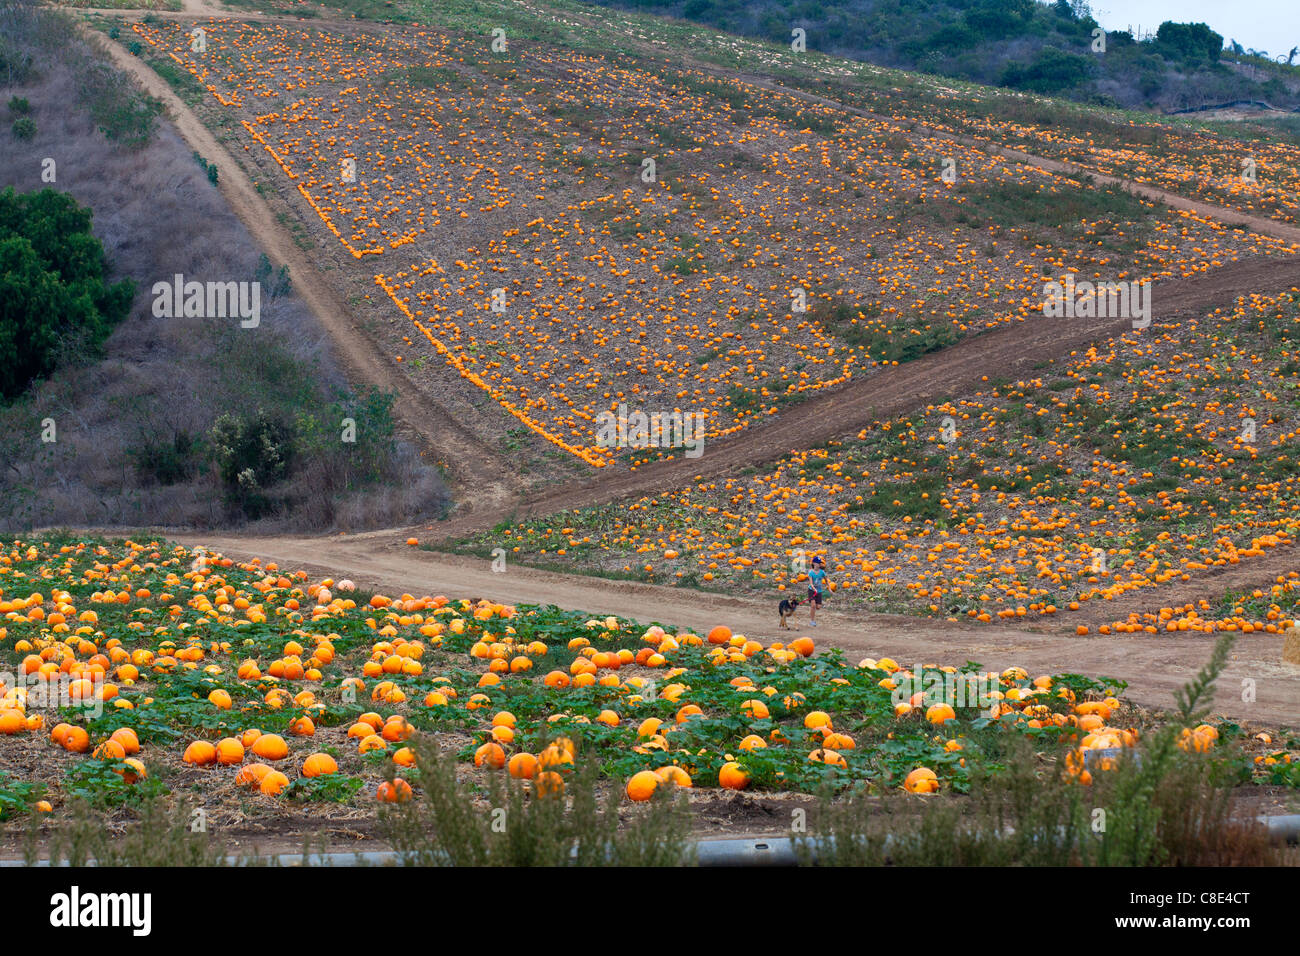 a-pumpkin-patch-near-oxnard-california-C8E4CT.jpg